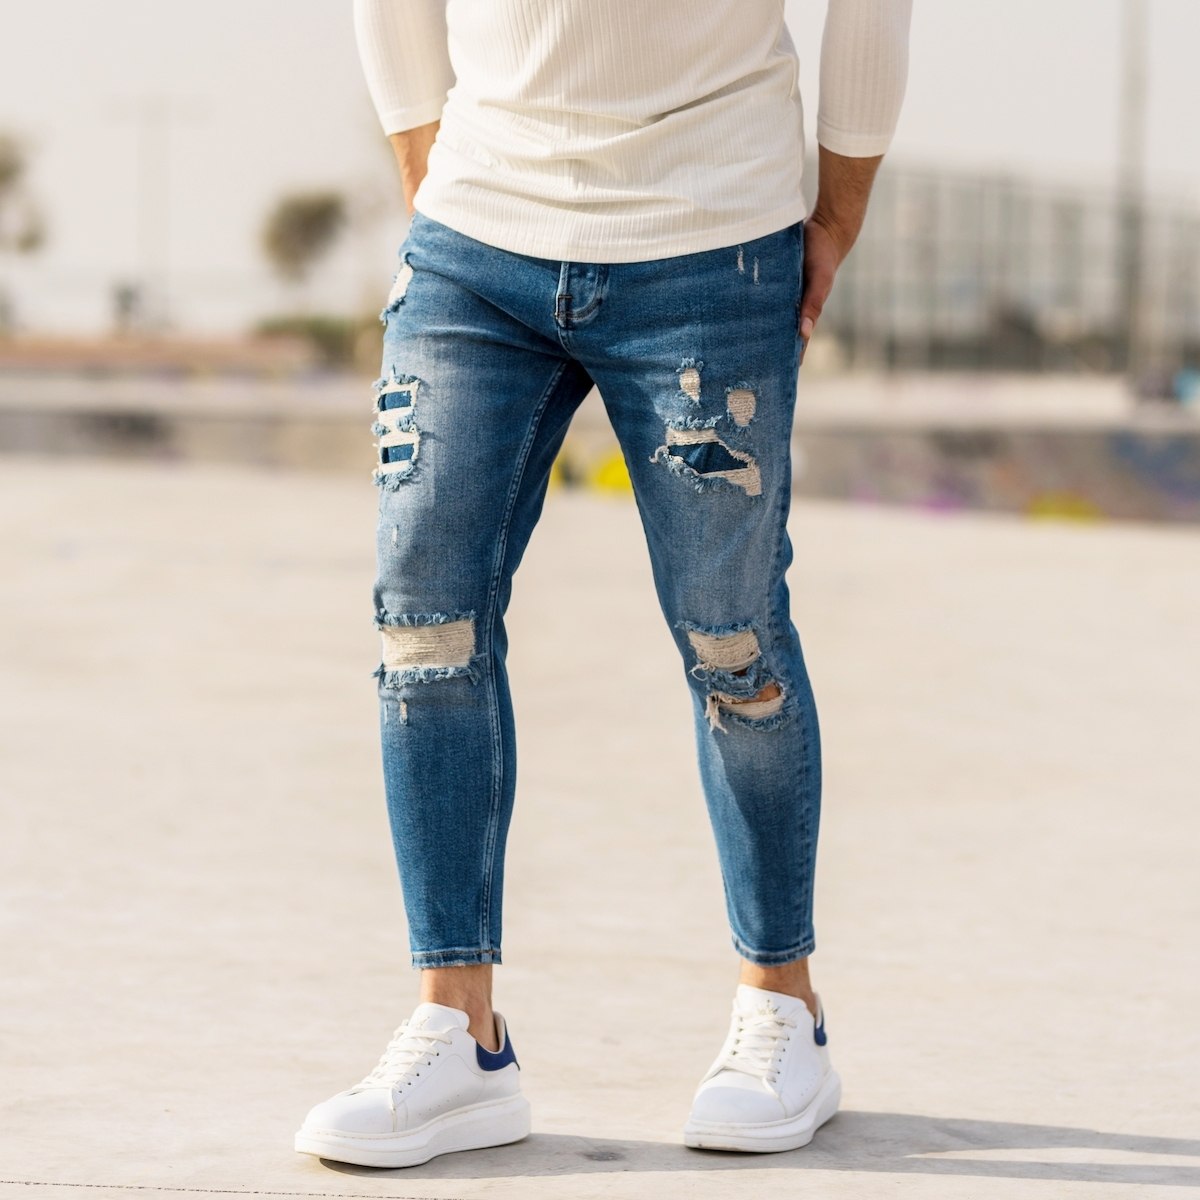 Herren Distressed Jeans mit Flick in dunkelblau - 1